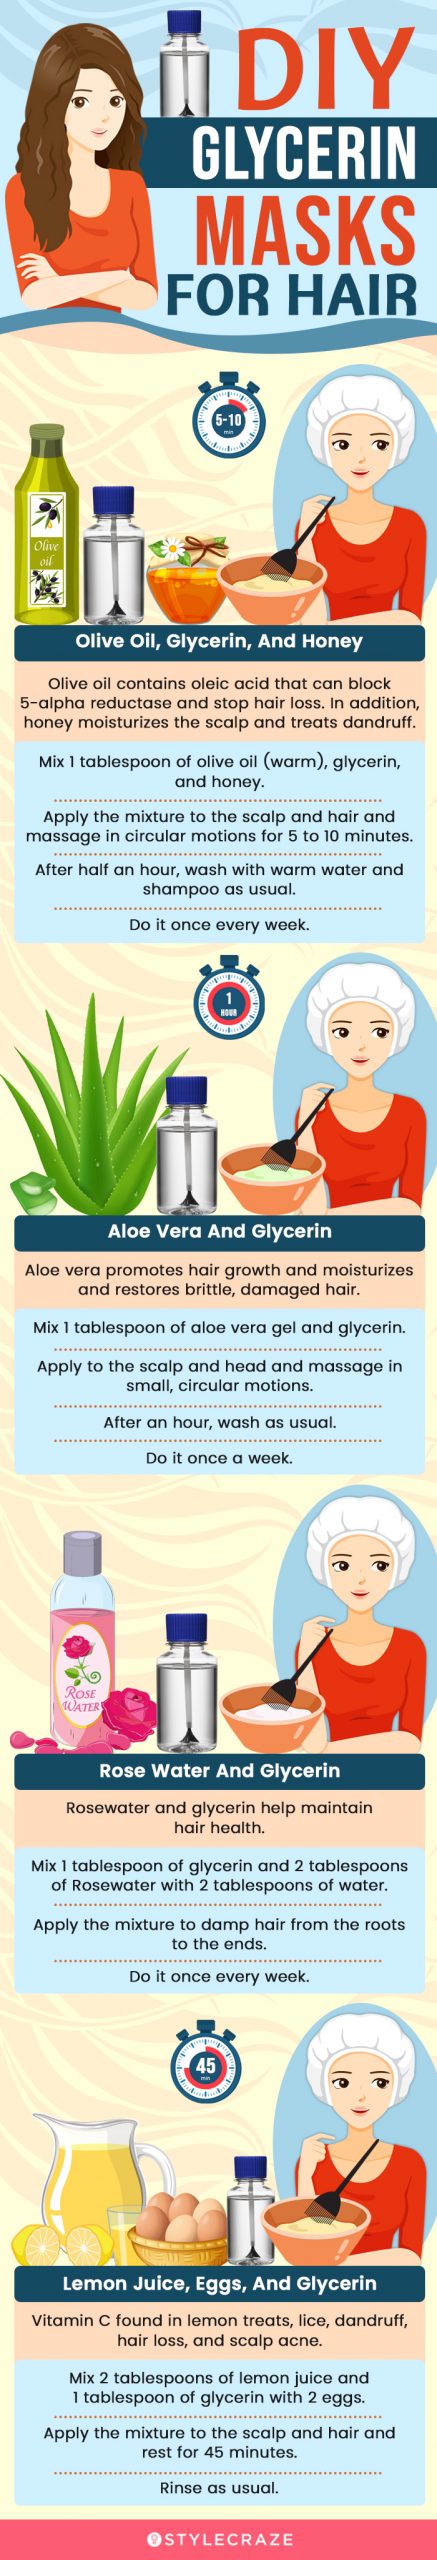 diy glycerin masks for hair (infographic)